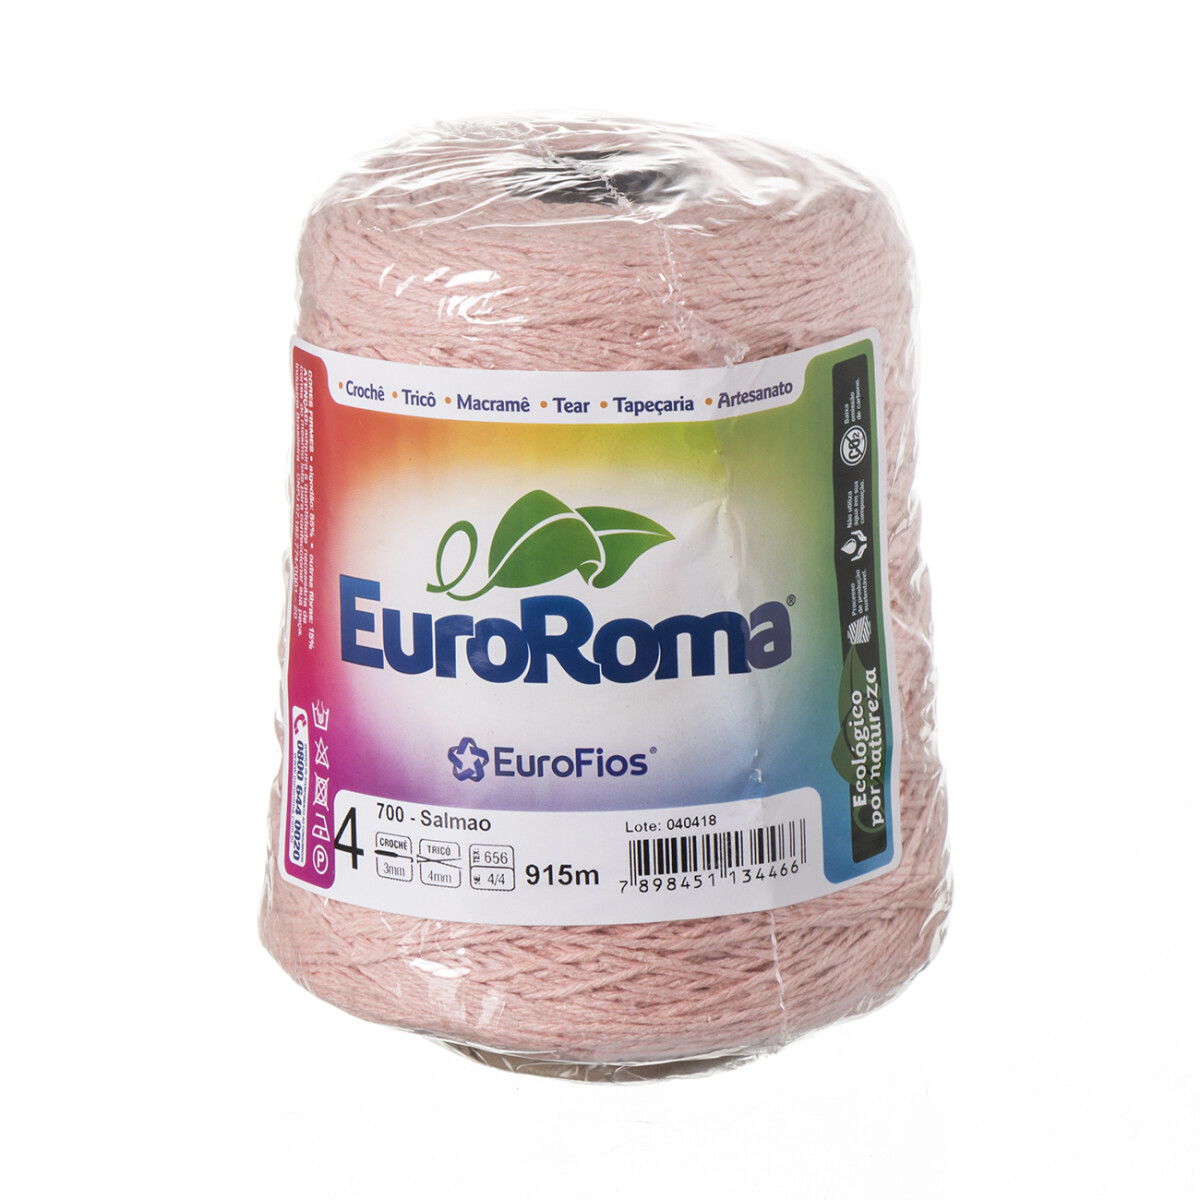 Euroroma algodón Colorido manualidades - salmon 